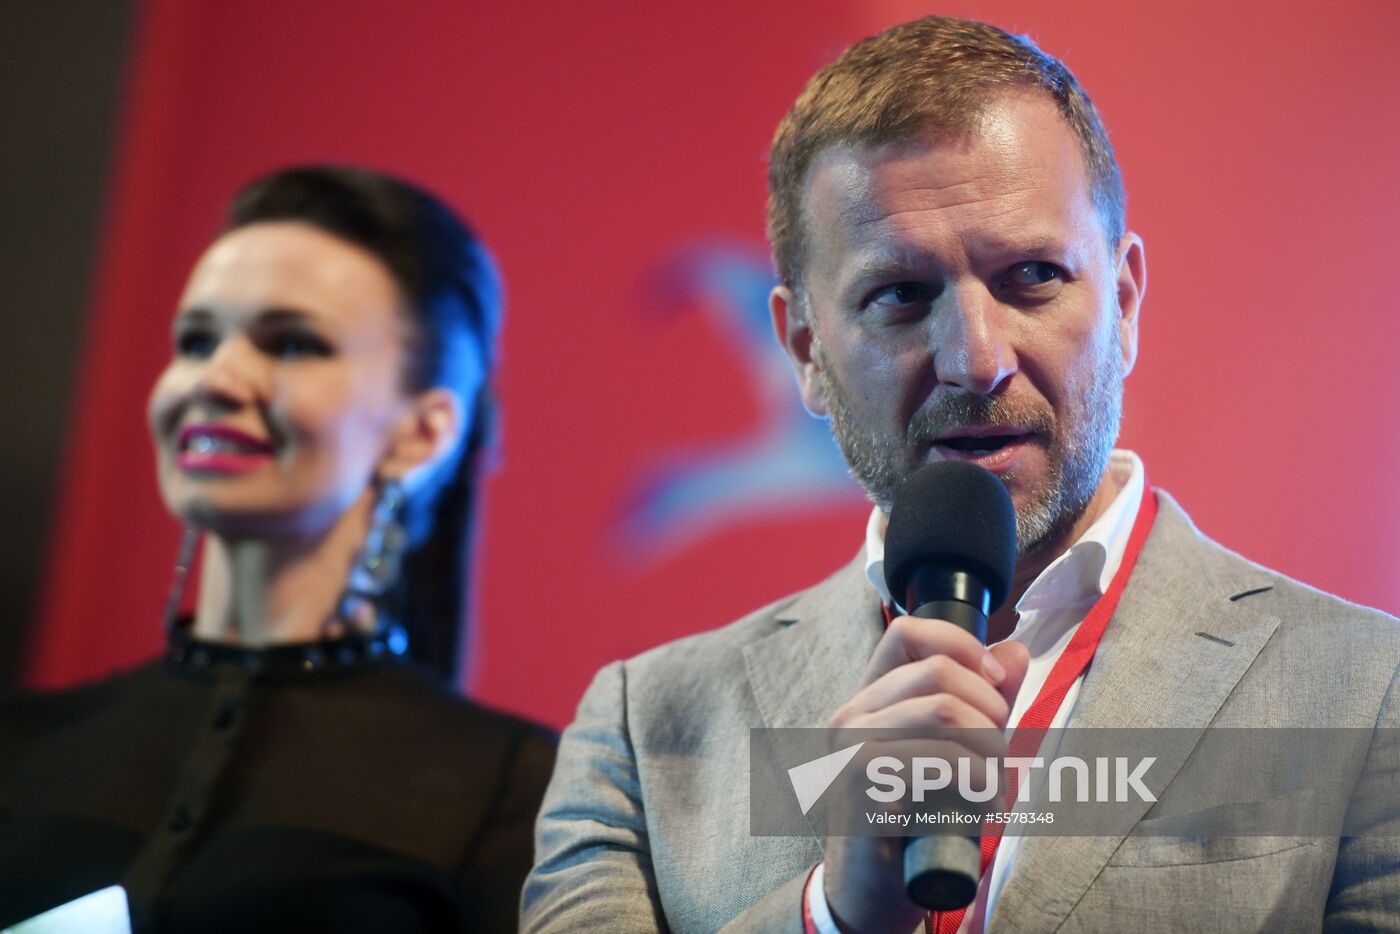 2018 Russian Media Manager award